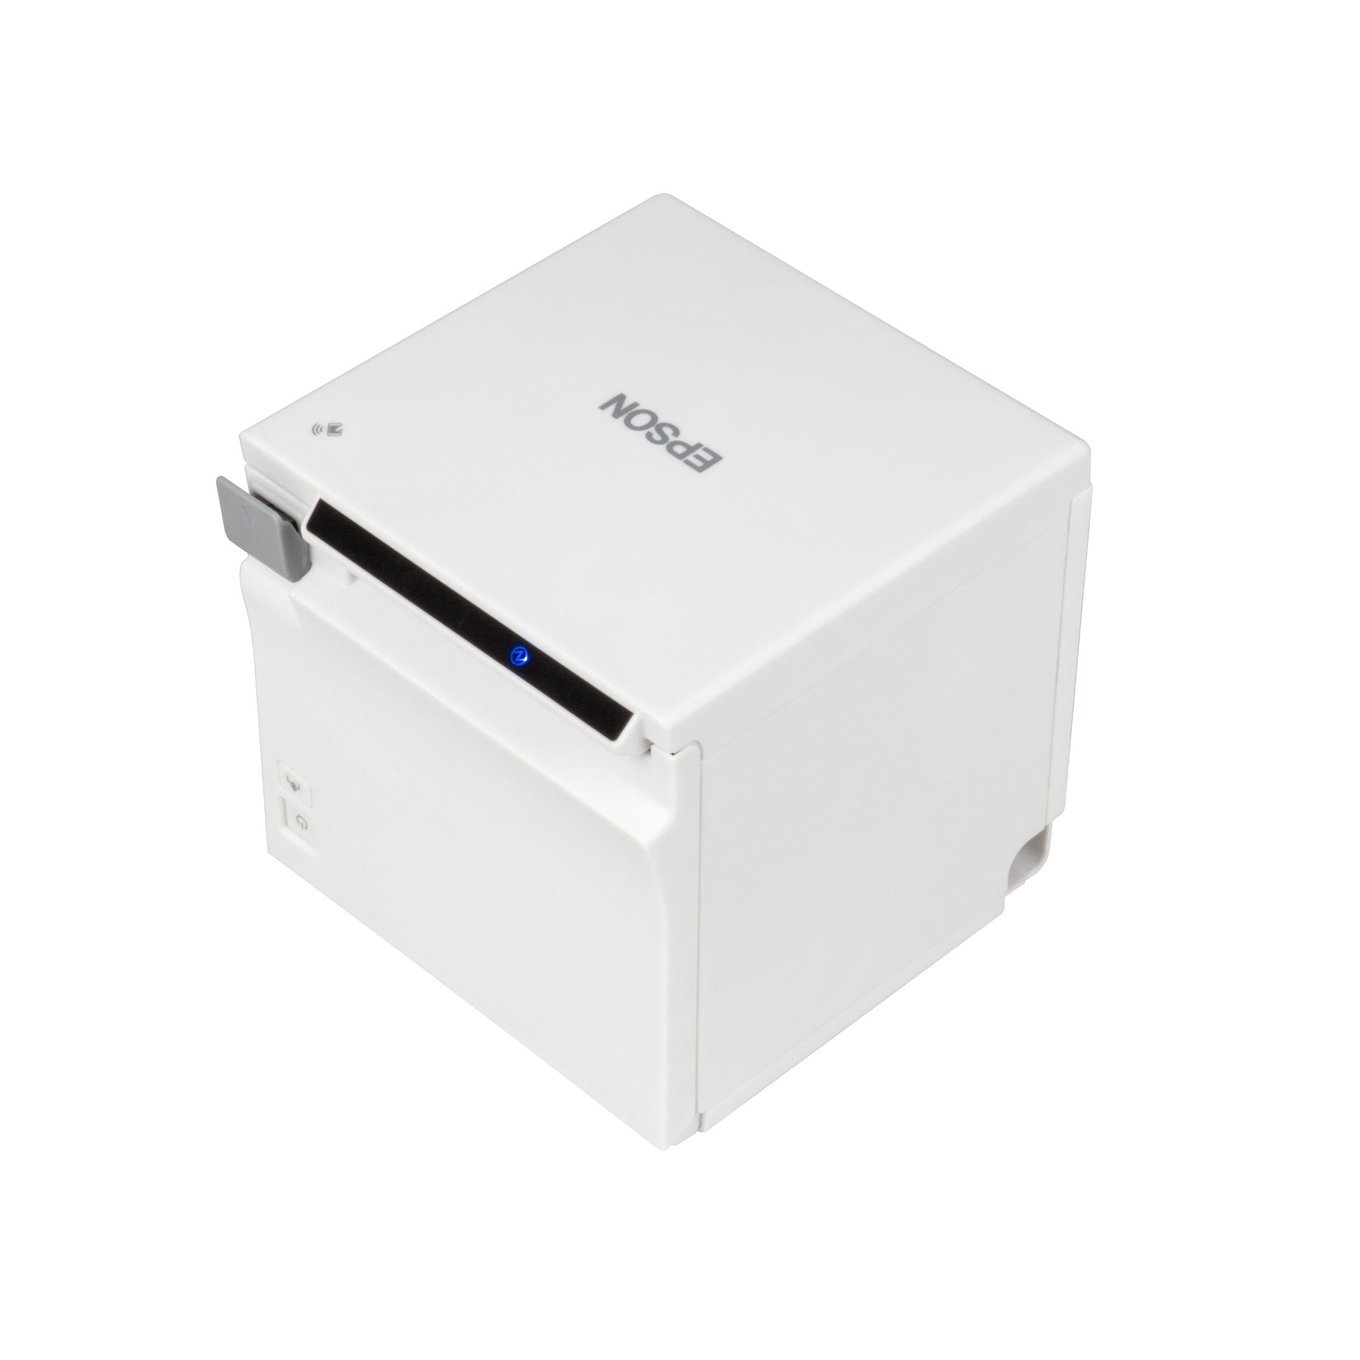 Epson TM-M30II Bluetooth Thermal Receipt Printer with USB Charging Port (White)